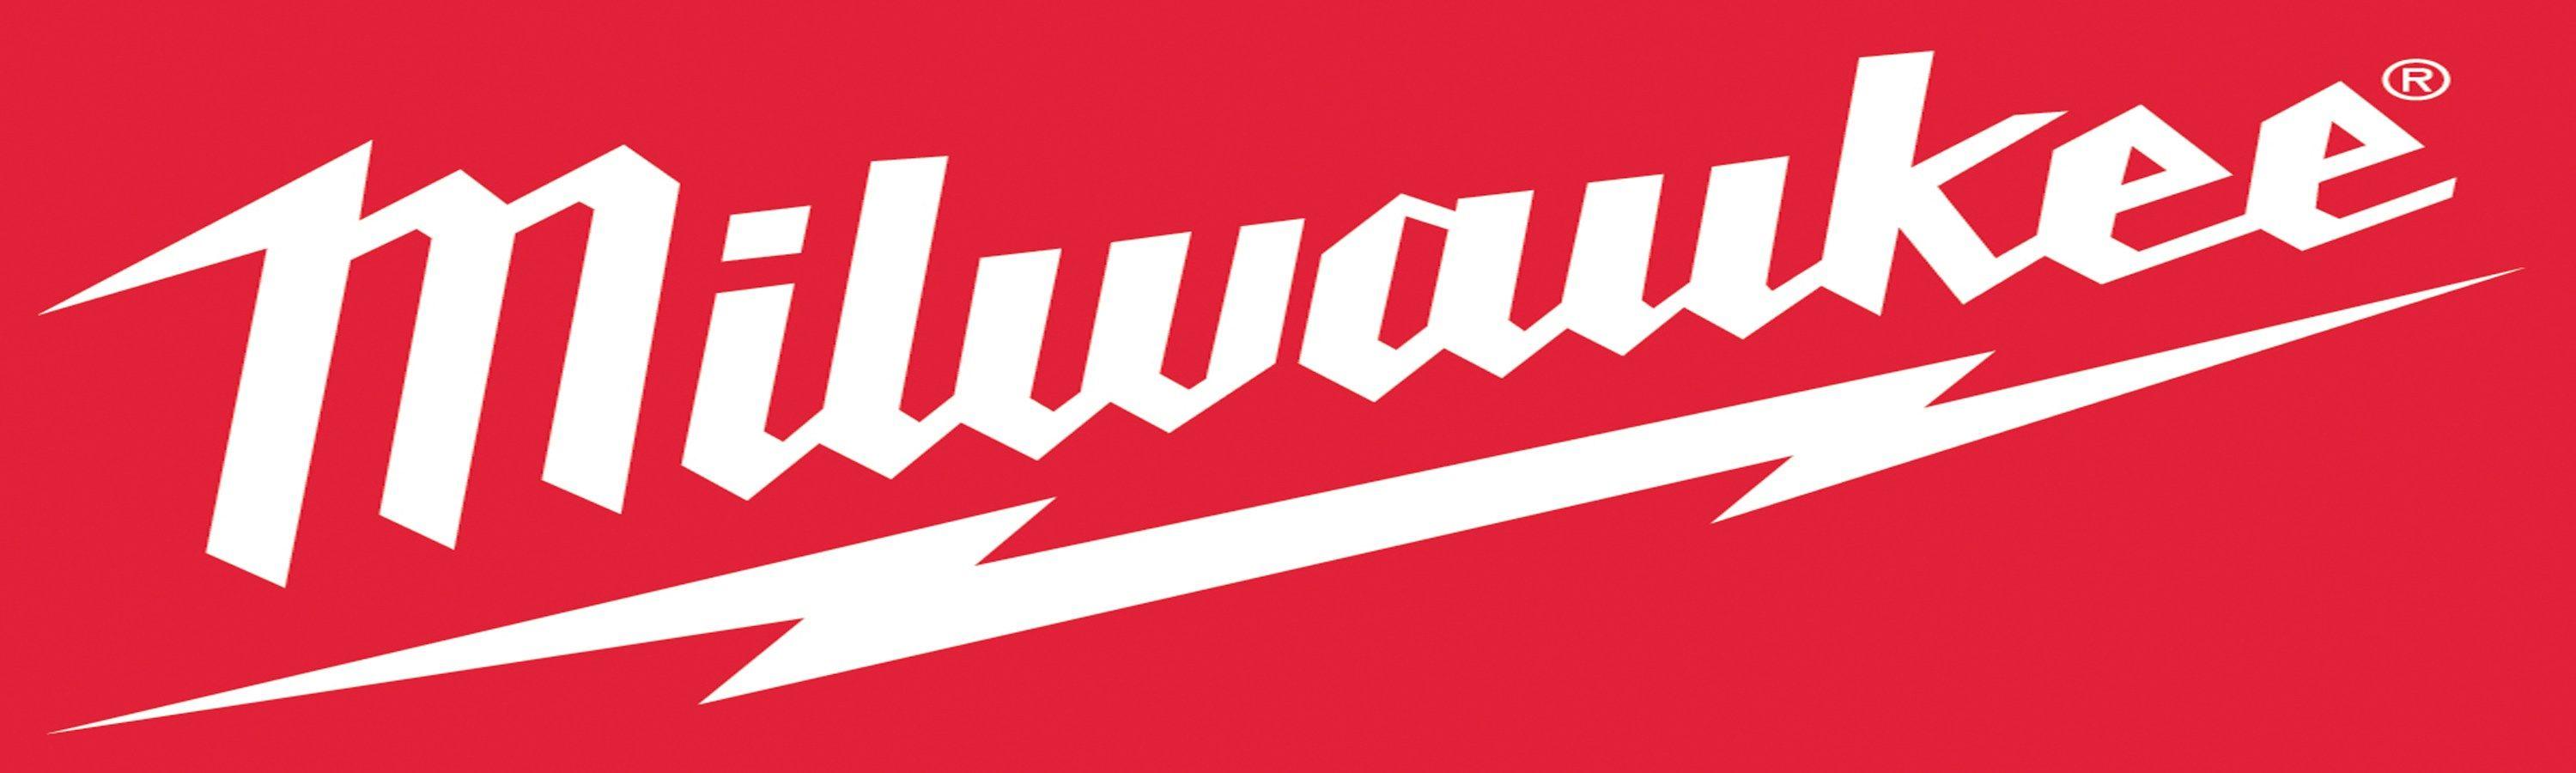 Red Banner Logo - Milwaukee Banner logo tools | Northwood's Hardware, Glen Arbor MI ...